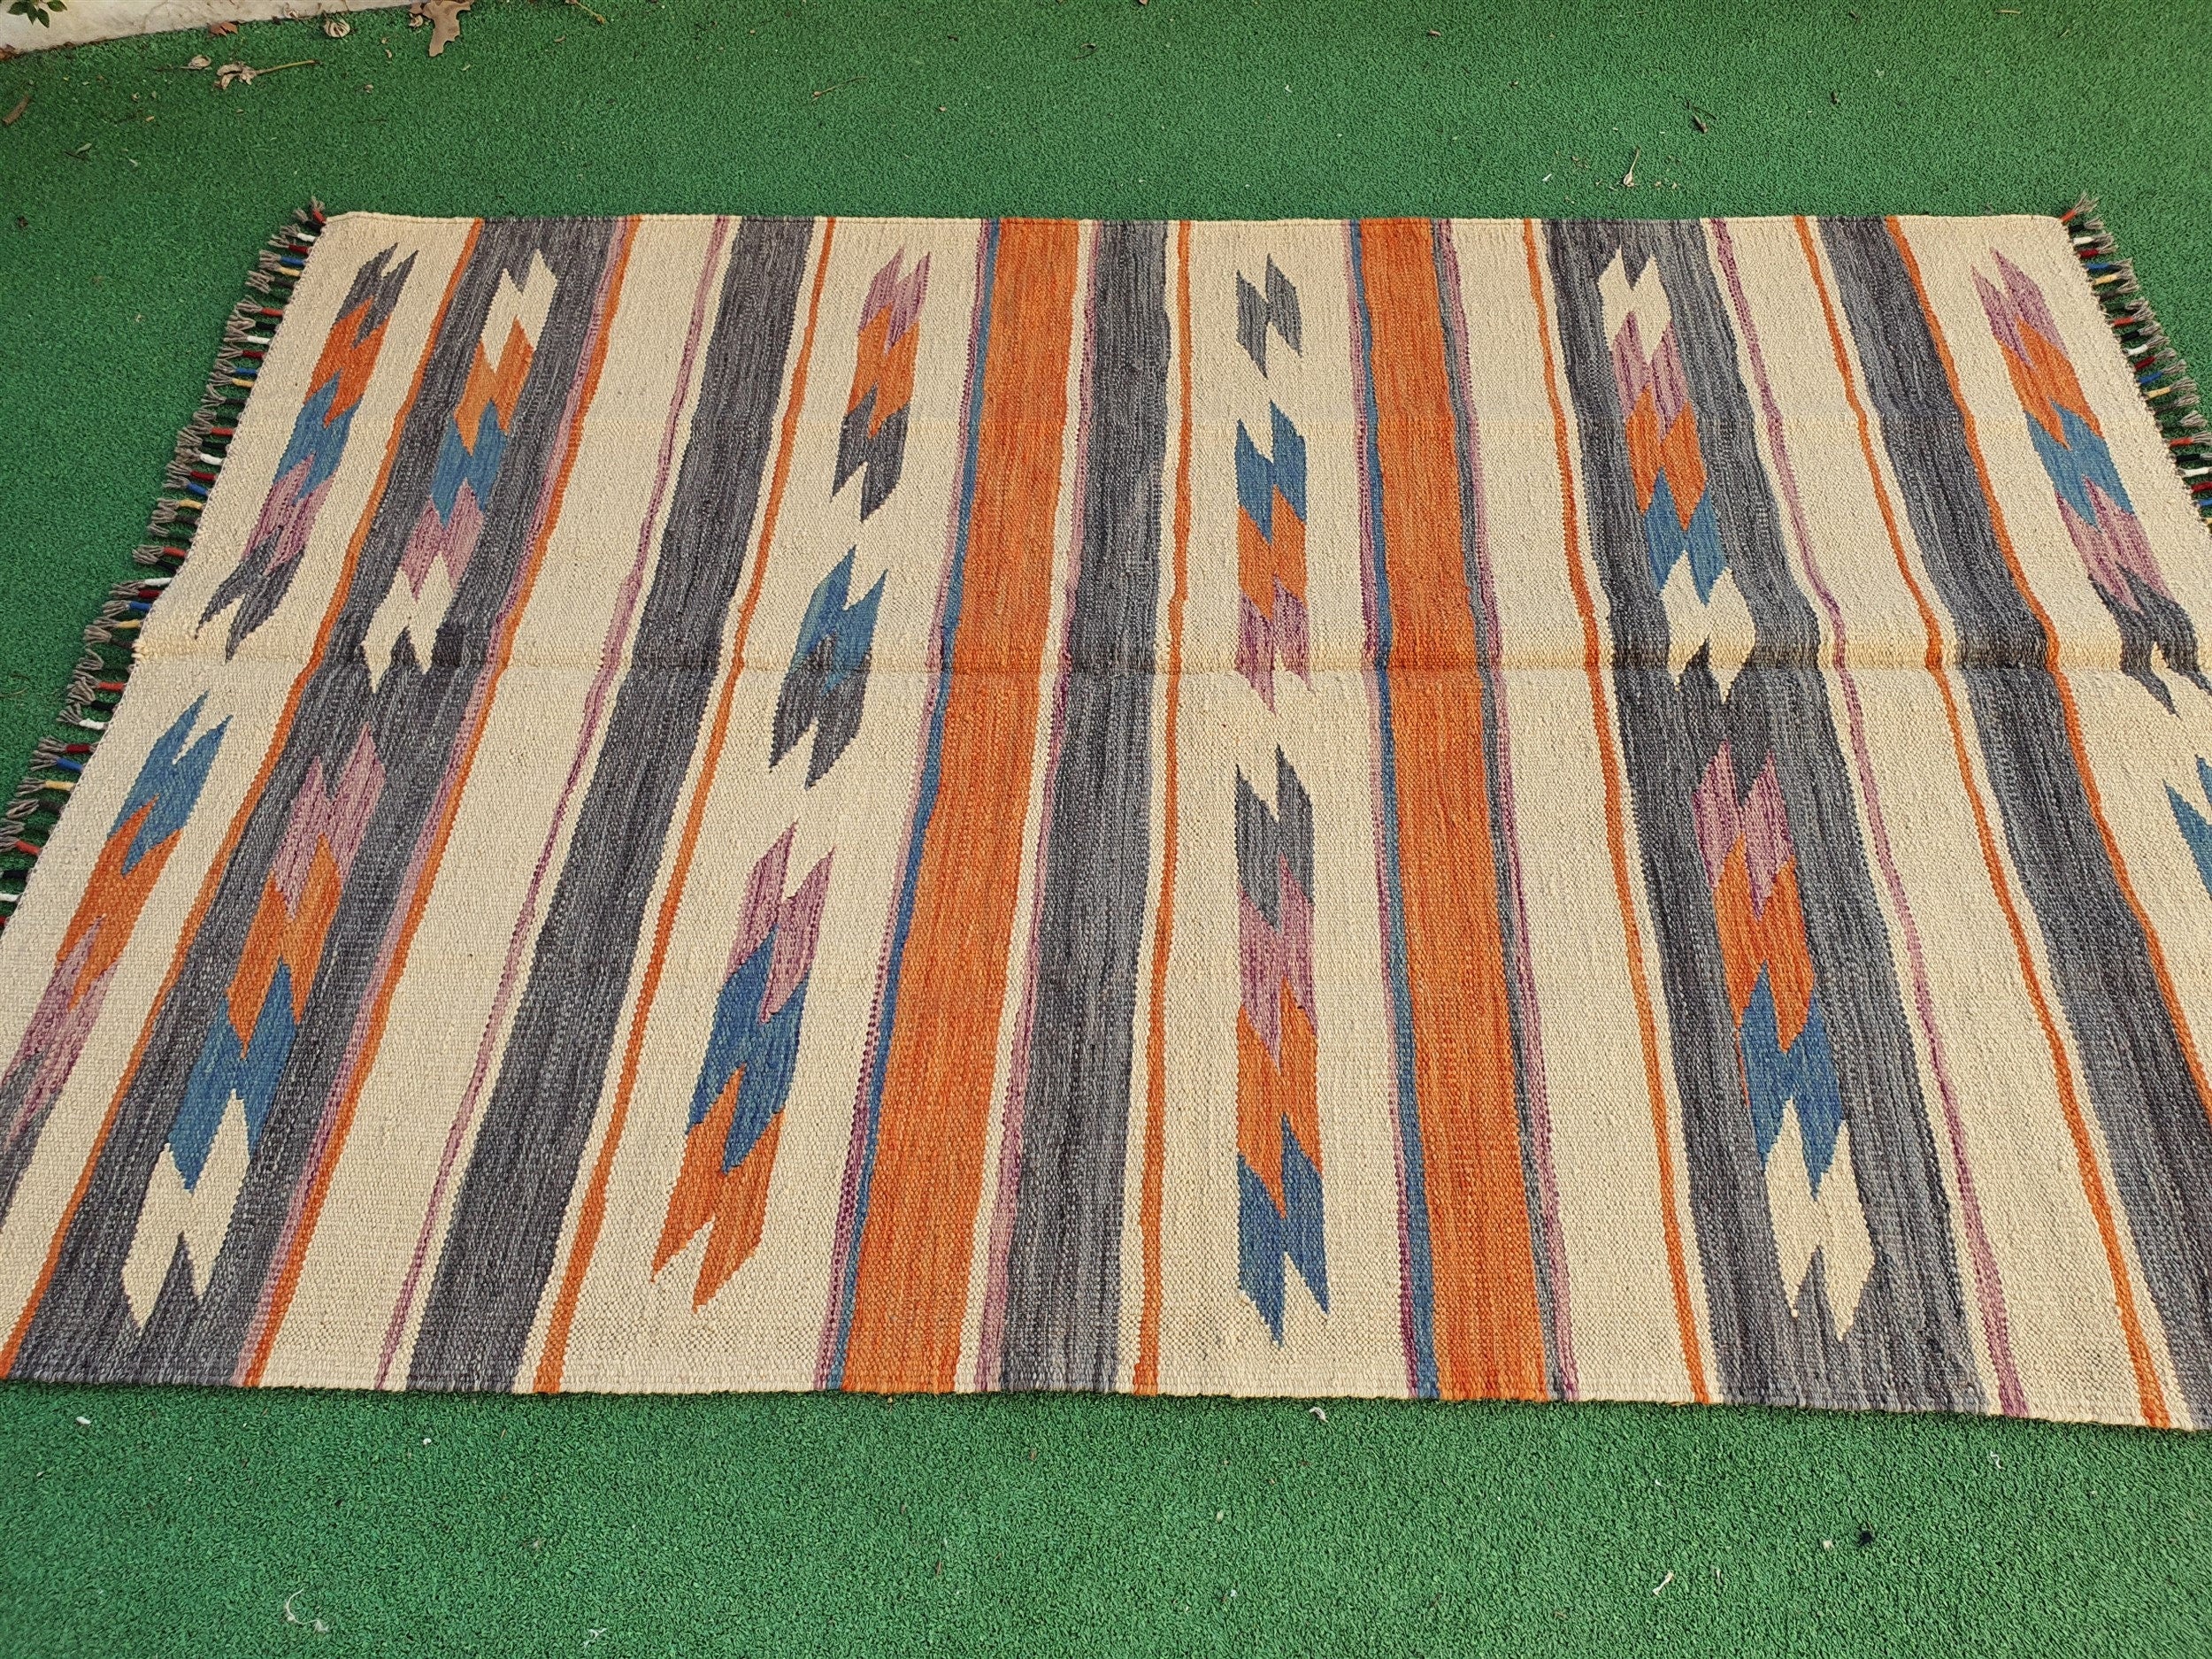 Vintage Turkish Kilim Rug, Moroccan Carpet, Anatolian Handmade Organic Wool Kilim Rug, Bohemian Rustic Decor Persian Area Rug 5'8"x3'9"